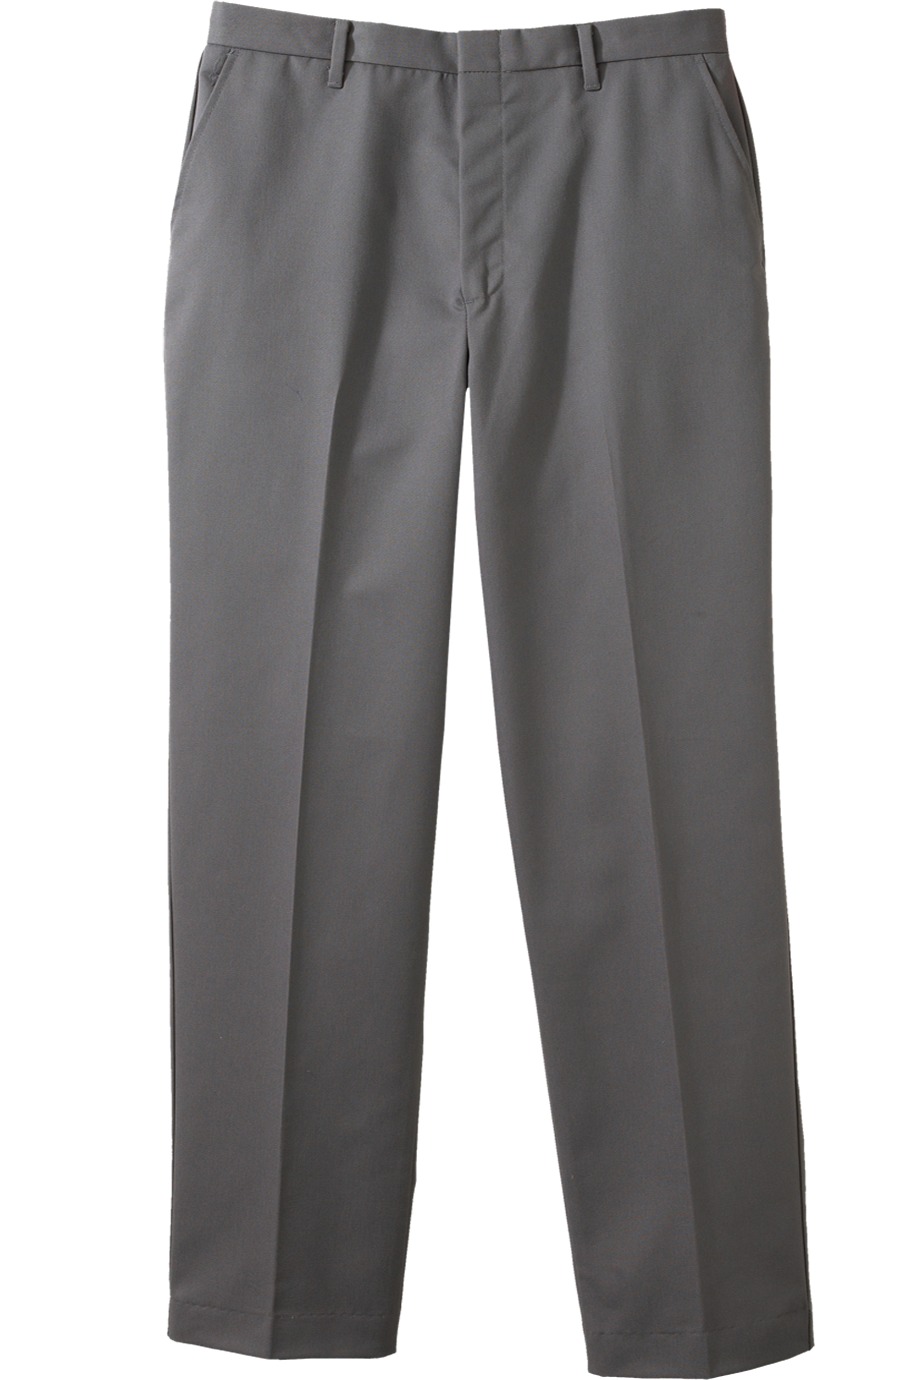 Edwards Garment 2510 - Men's Business Casual Flat Front Pant